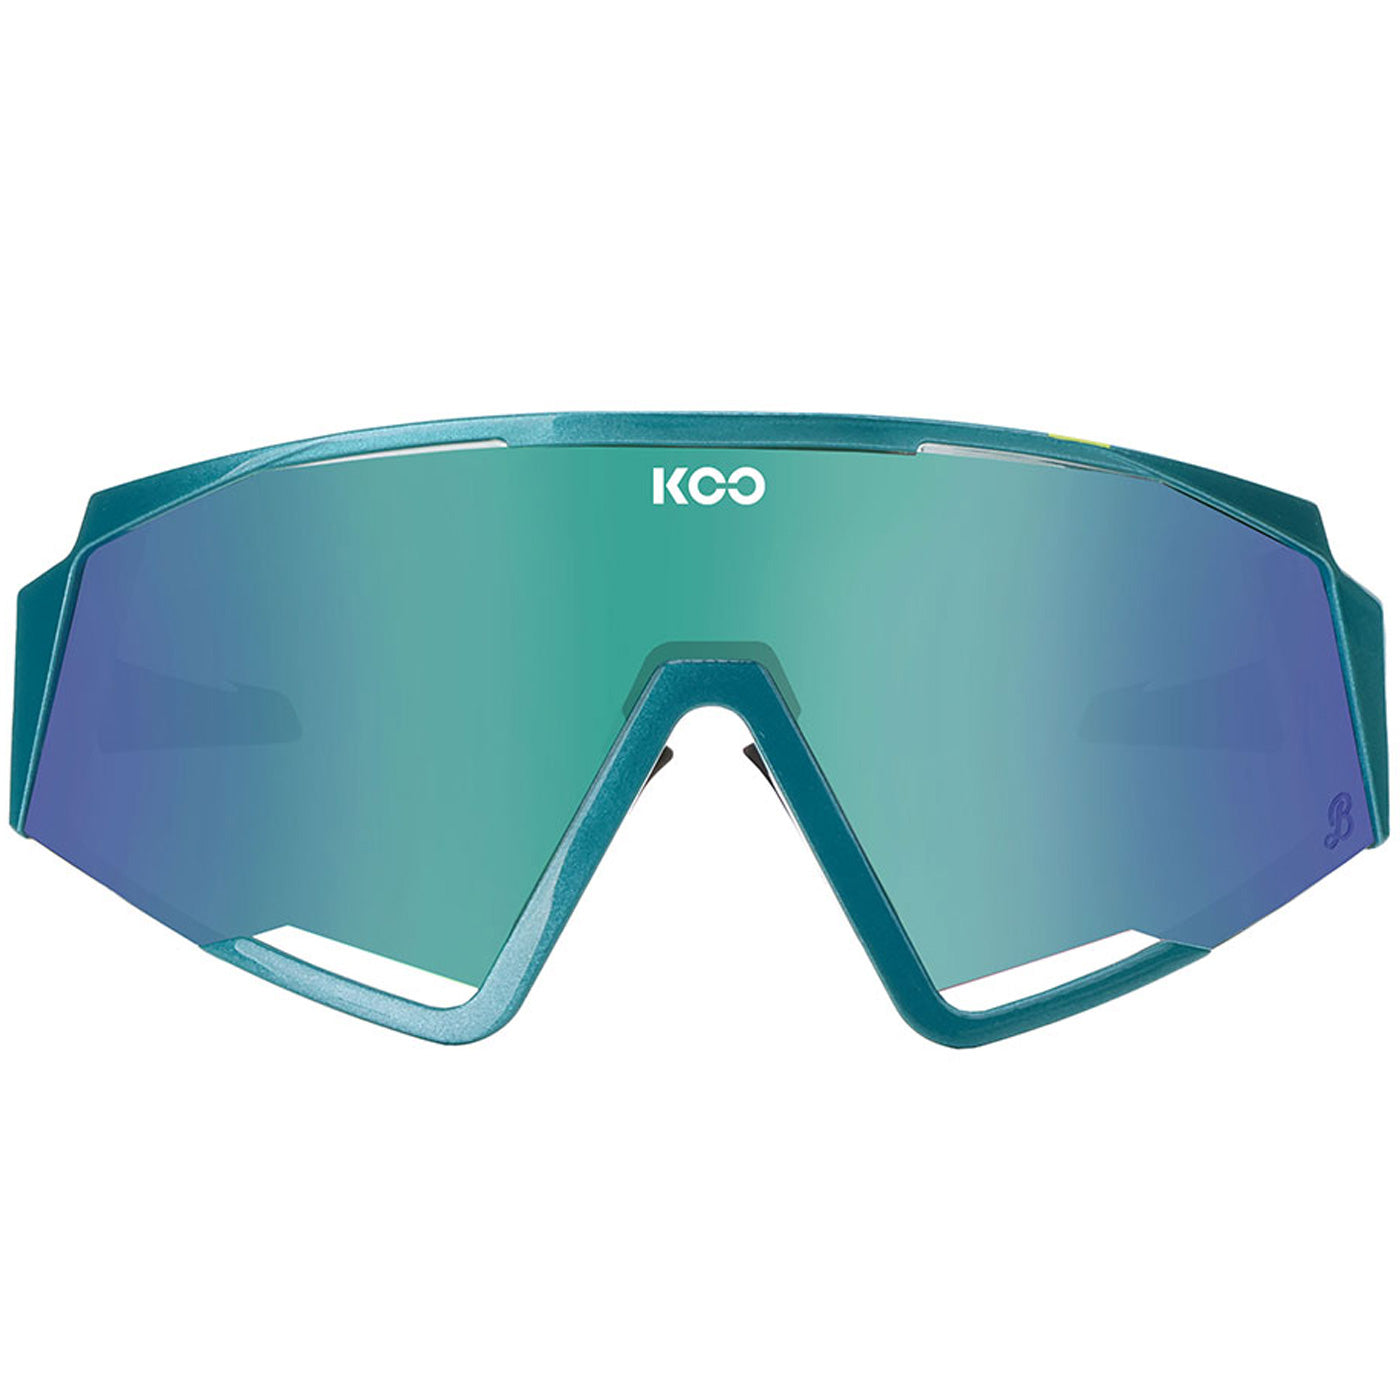 KOO Spectro sunglasses - Bora Hansgrohe